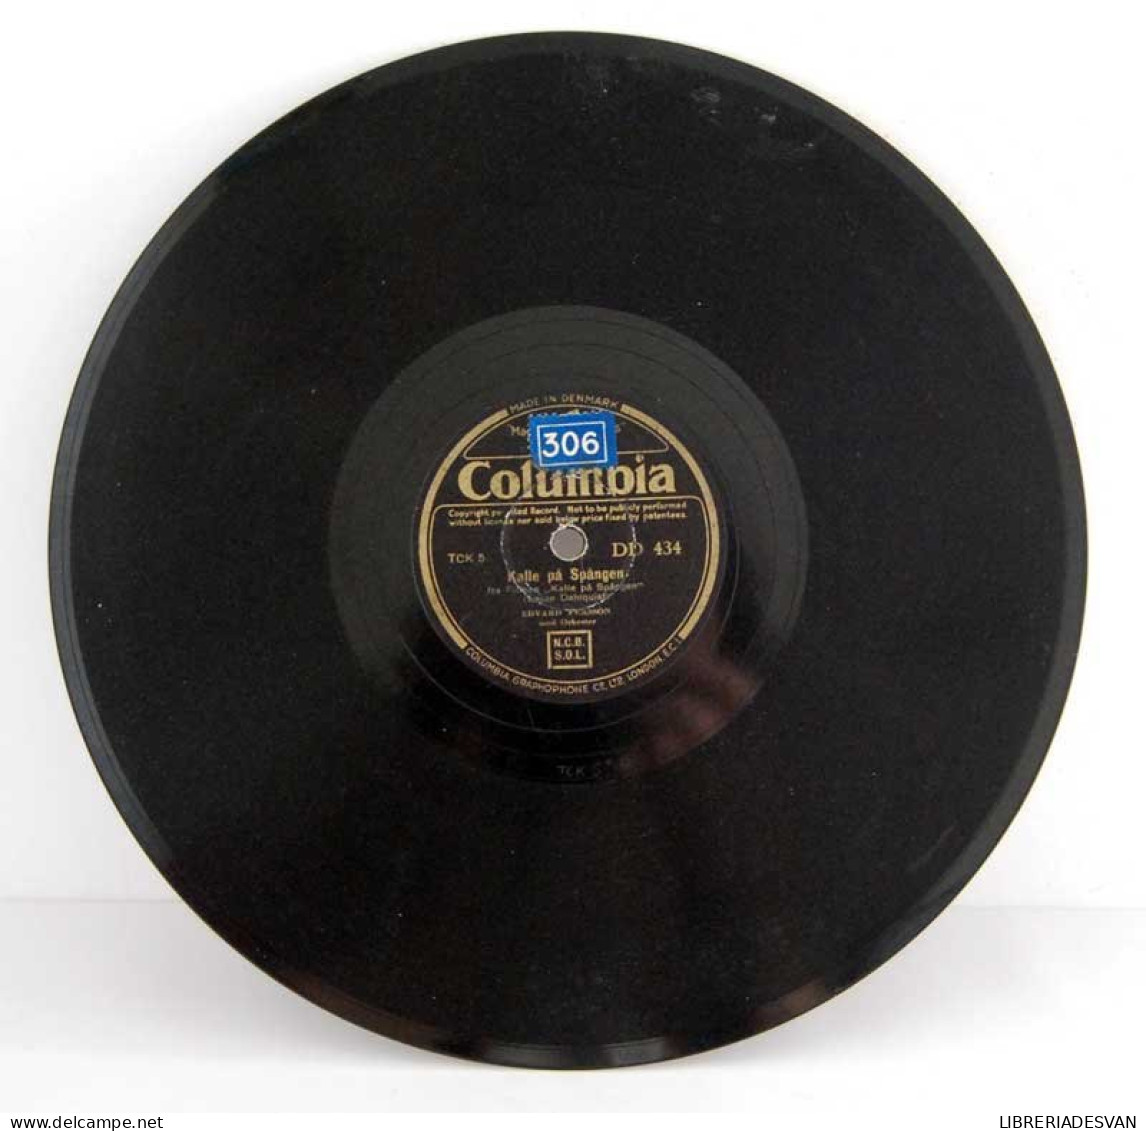 Edvard Persson - Kalle Pa Spangen / Litet Grann Fran Ovan. Disco De Pizarra DD.434 - 78 T - Disques Pour Gramophone